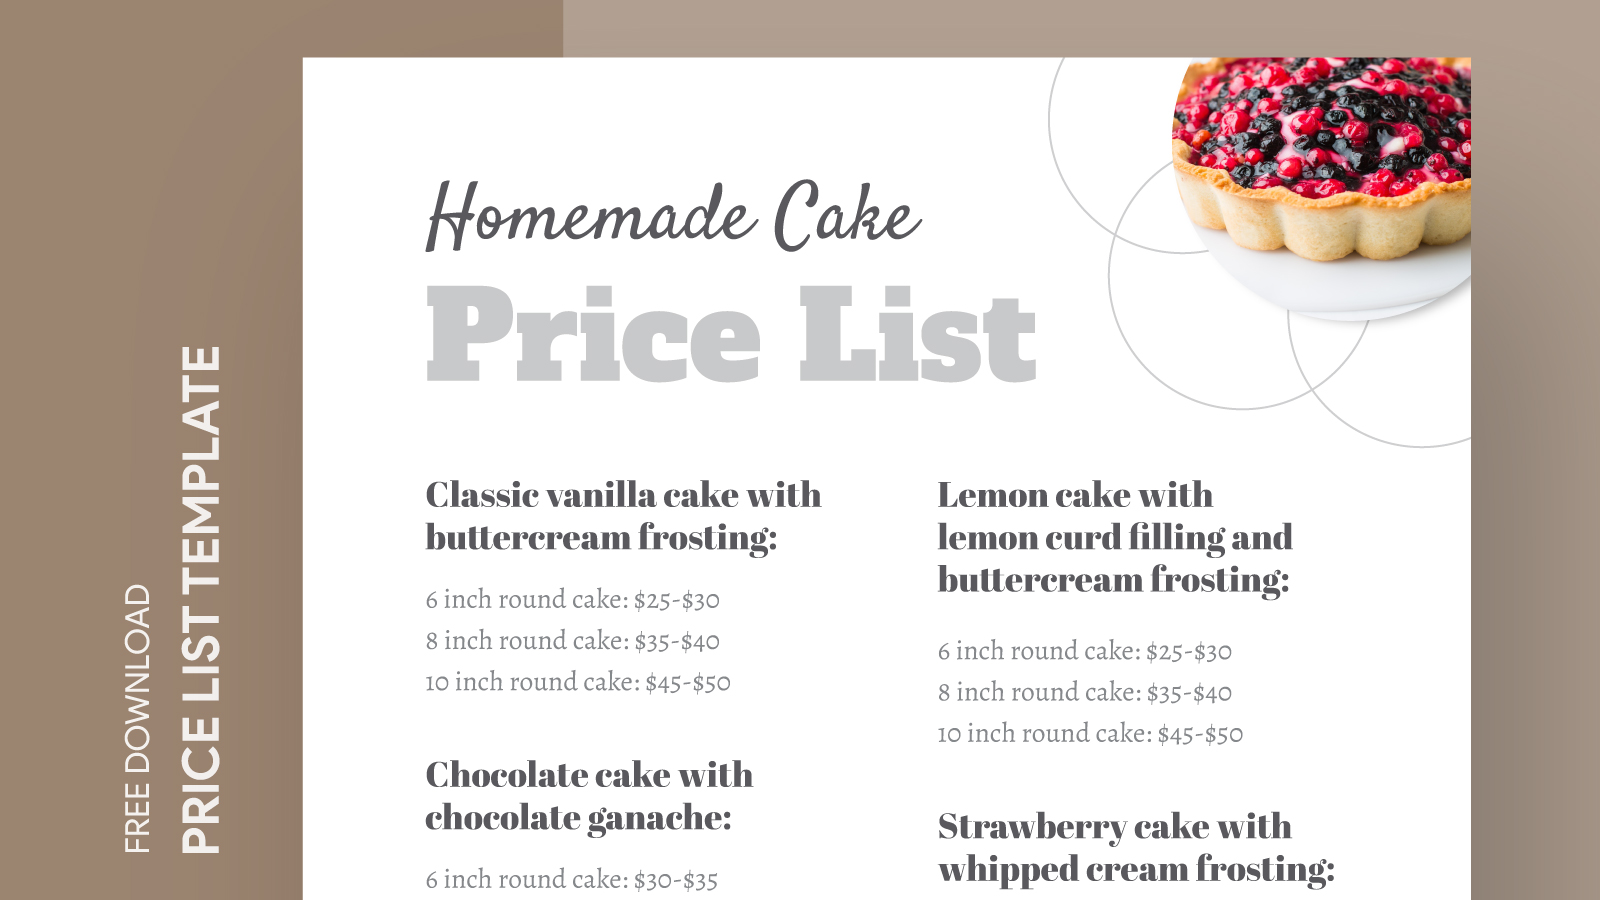 Homemade Cake Price List Free Google Docs Template gdoc.io